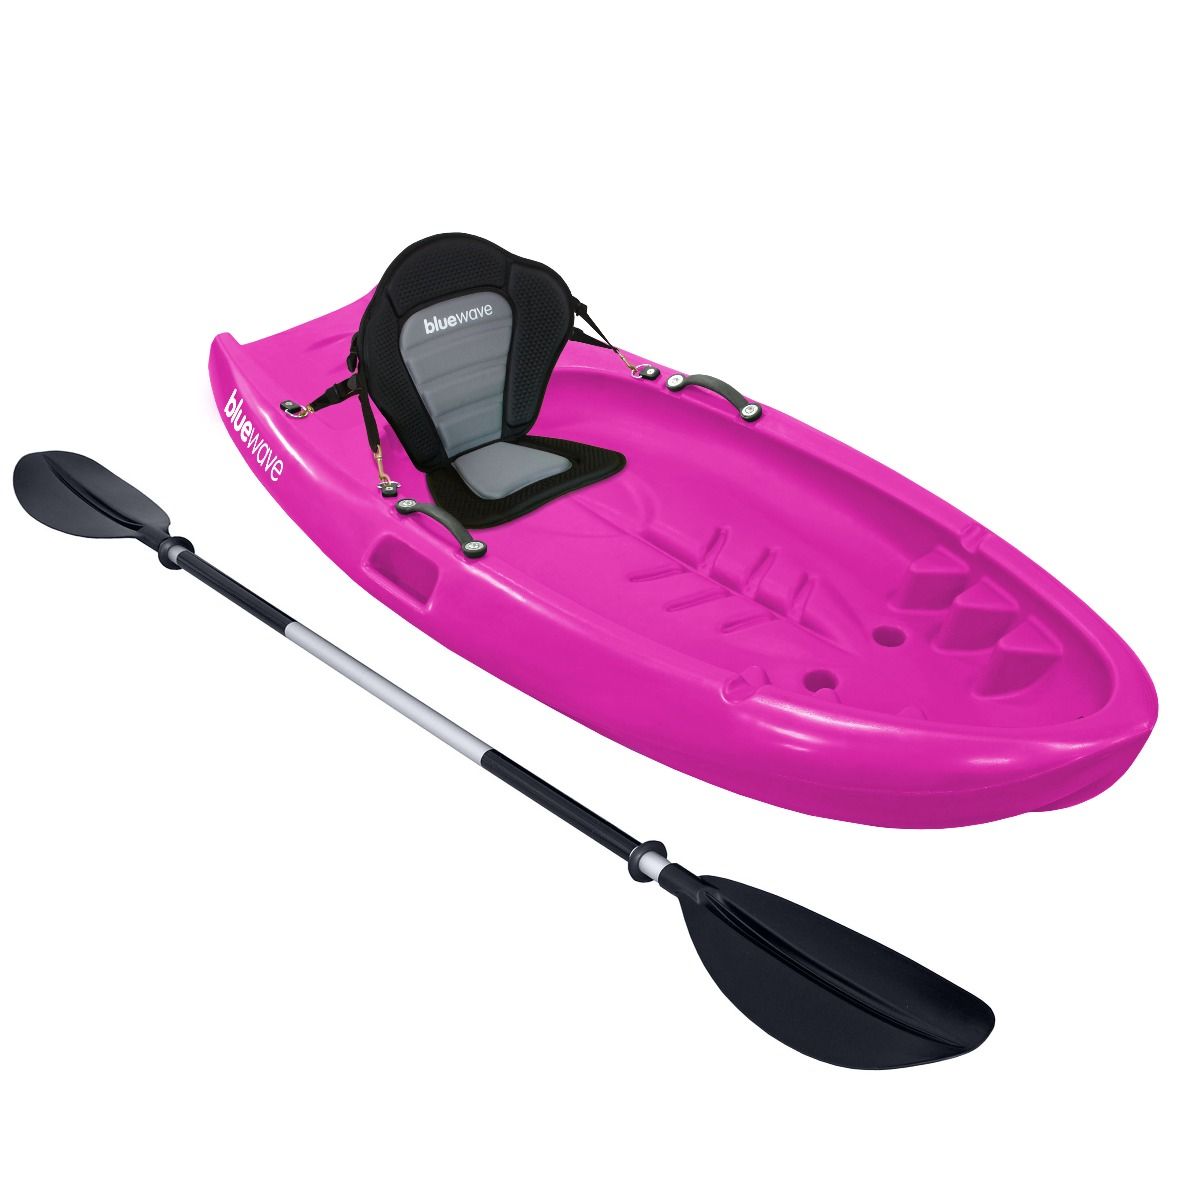 Bluewave Manta Junior / Kids / Childs Sit On Top Kayak Package – Pink